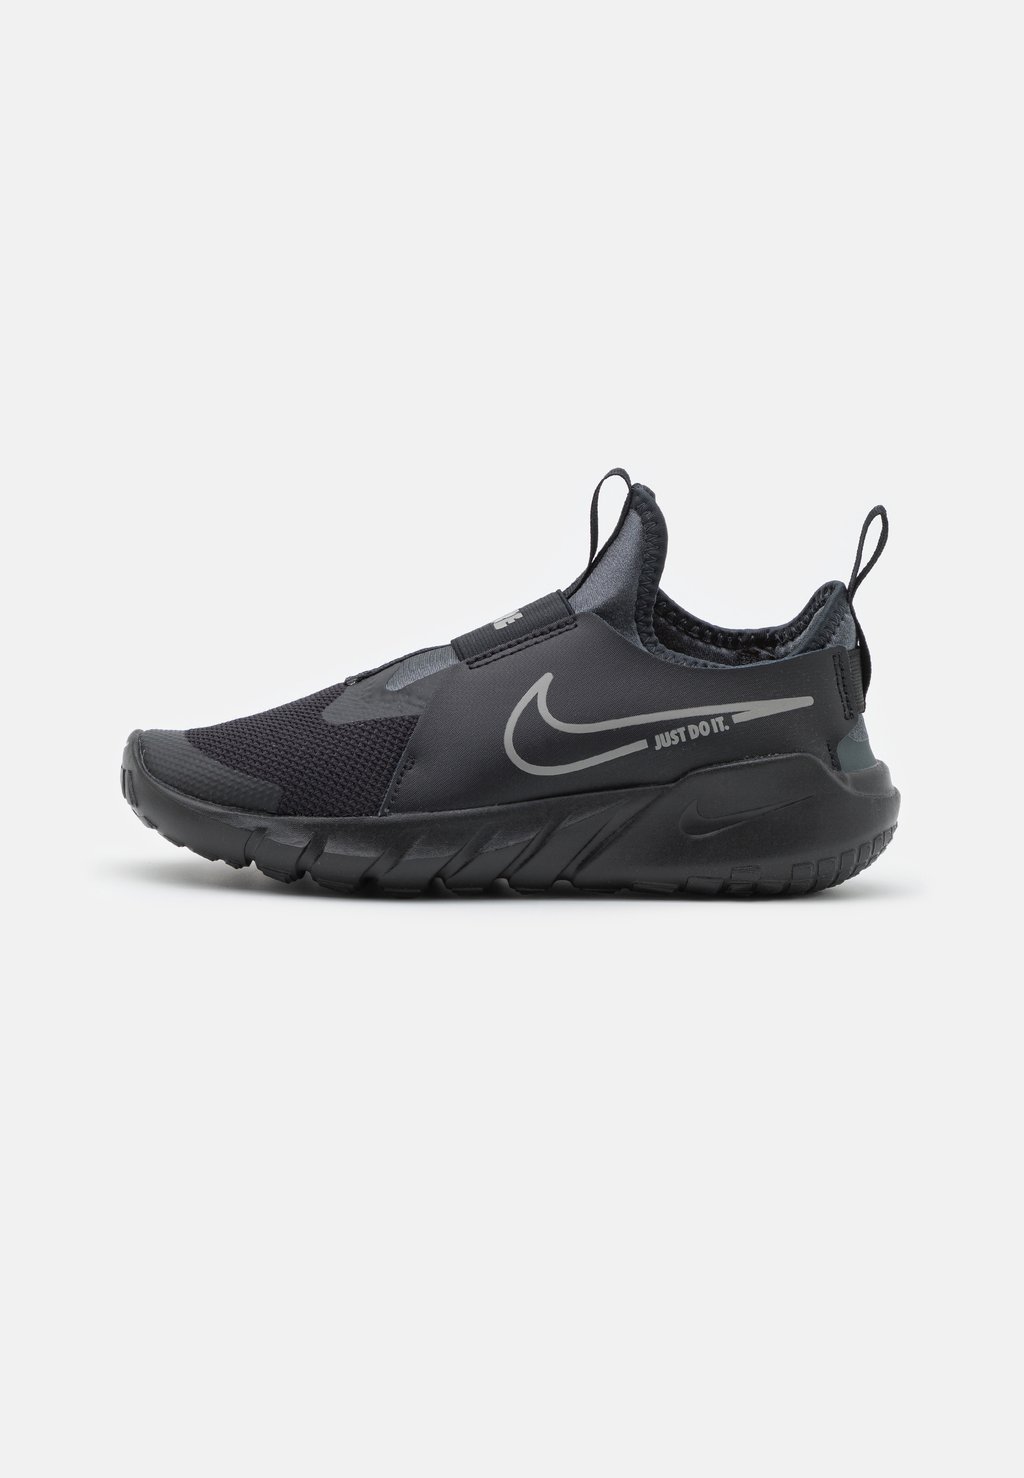 Нейтральные кроссовки Flex Runner 2 Unisex Nike, цвет black/flat pewter/anthracite/photo blue